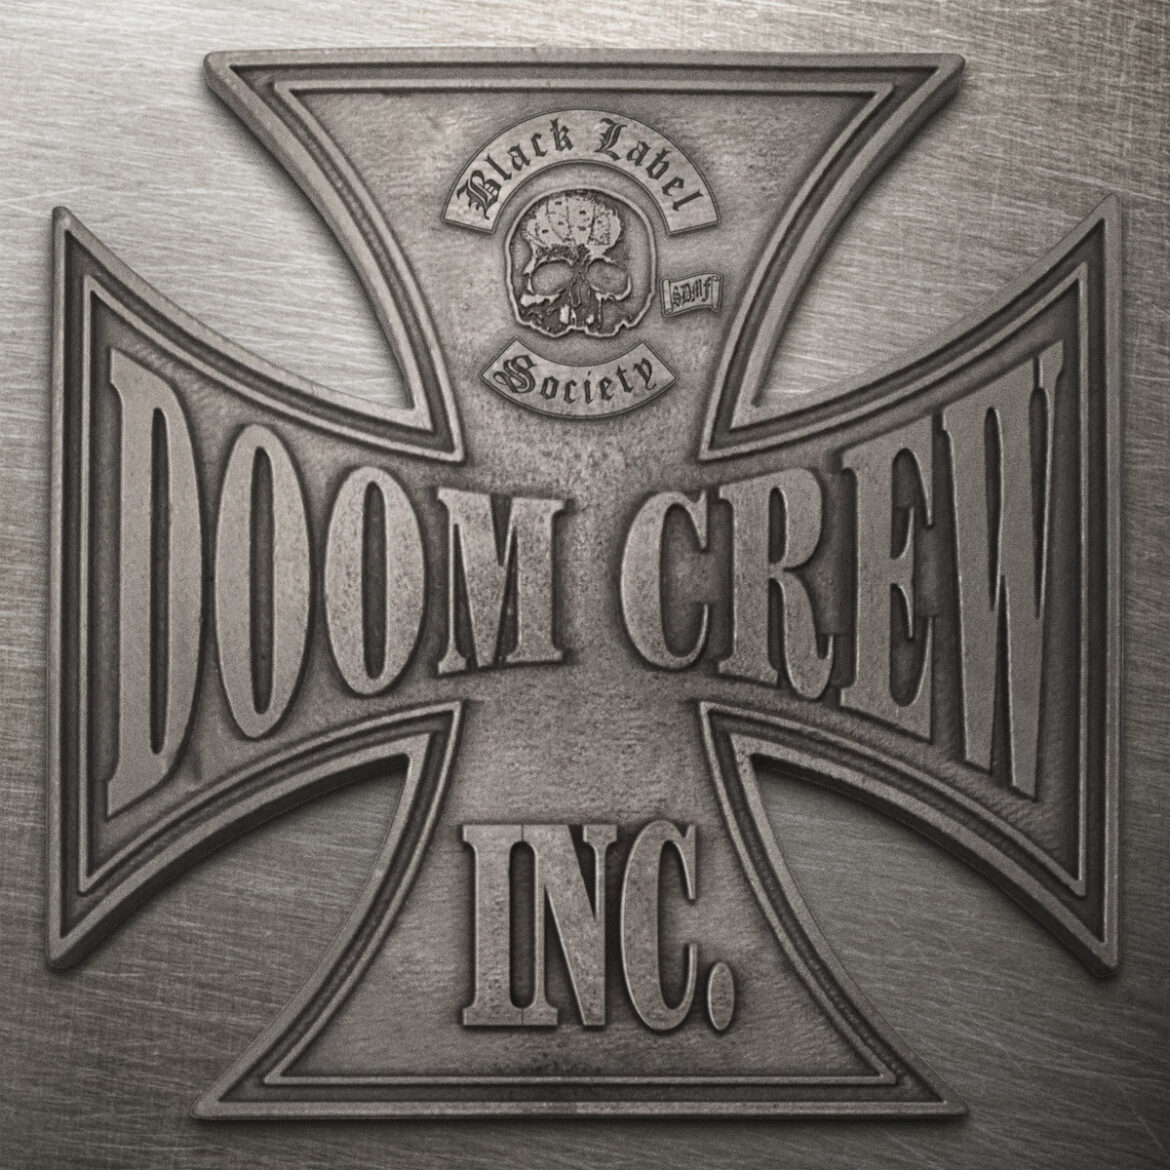 ROCKET REVIEW: BLACK LABEL SOCIETY – “Doom Crew Inc.”(CD)